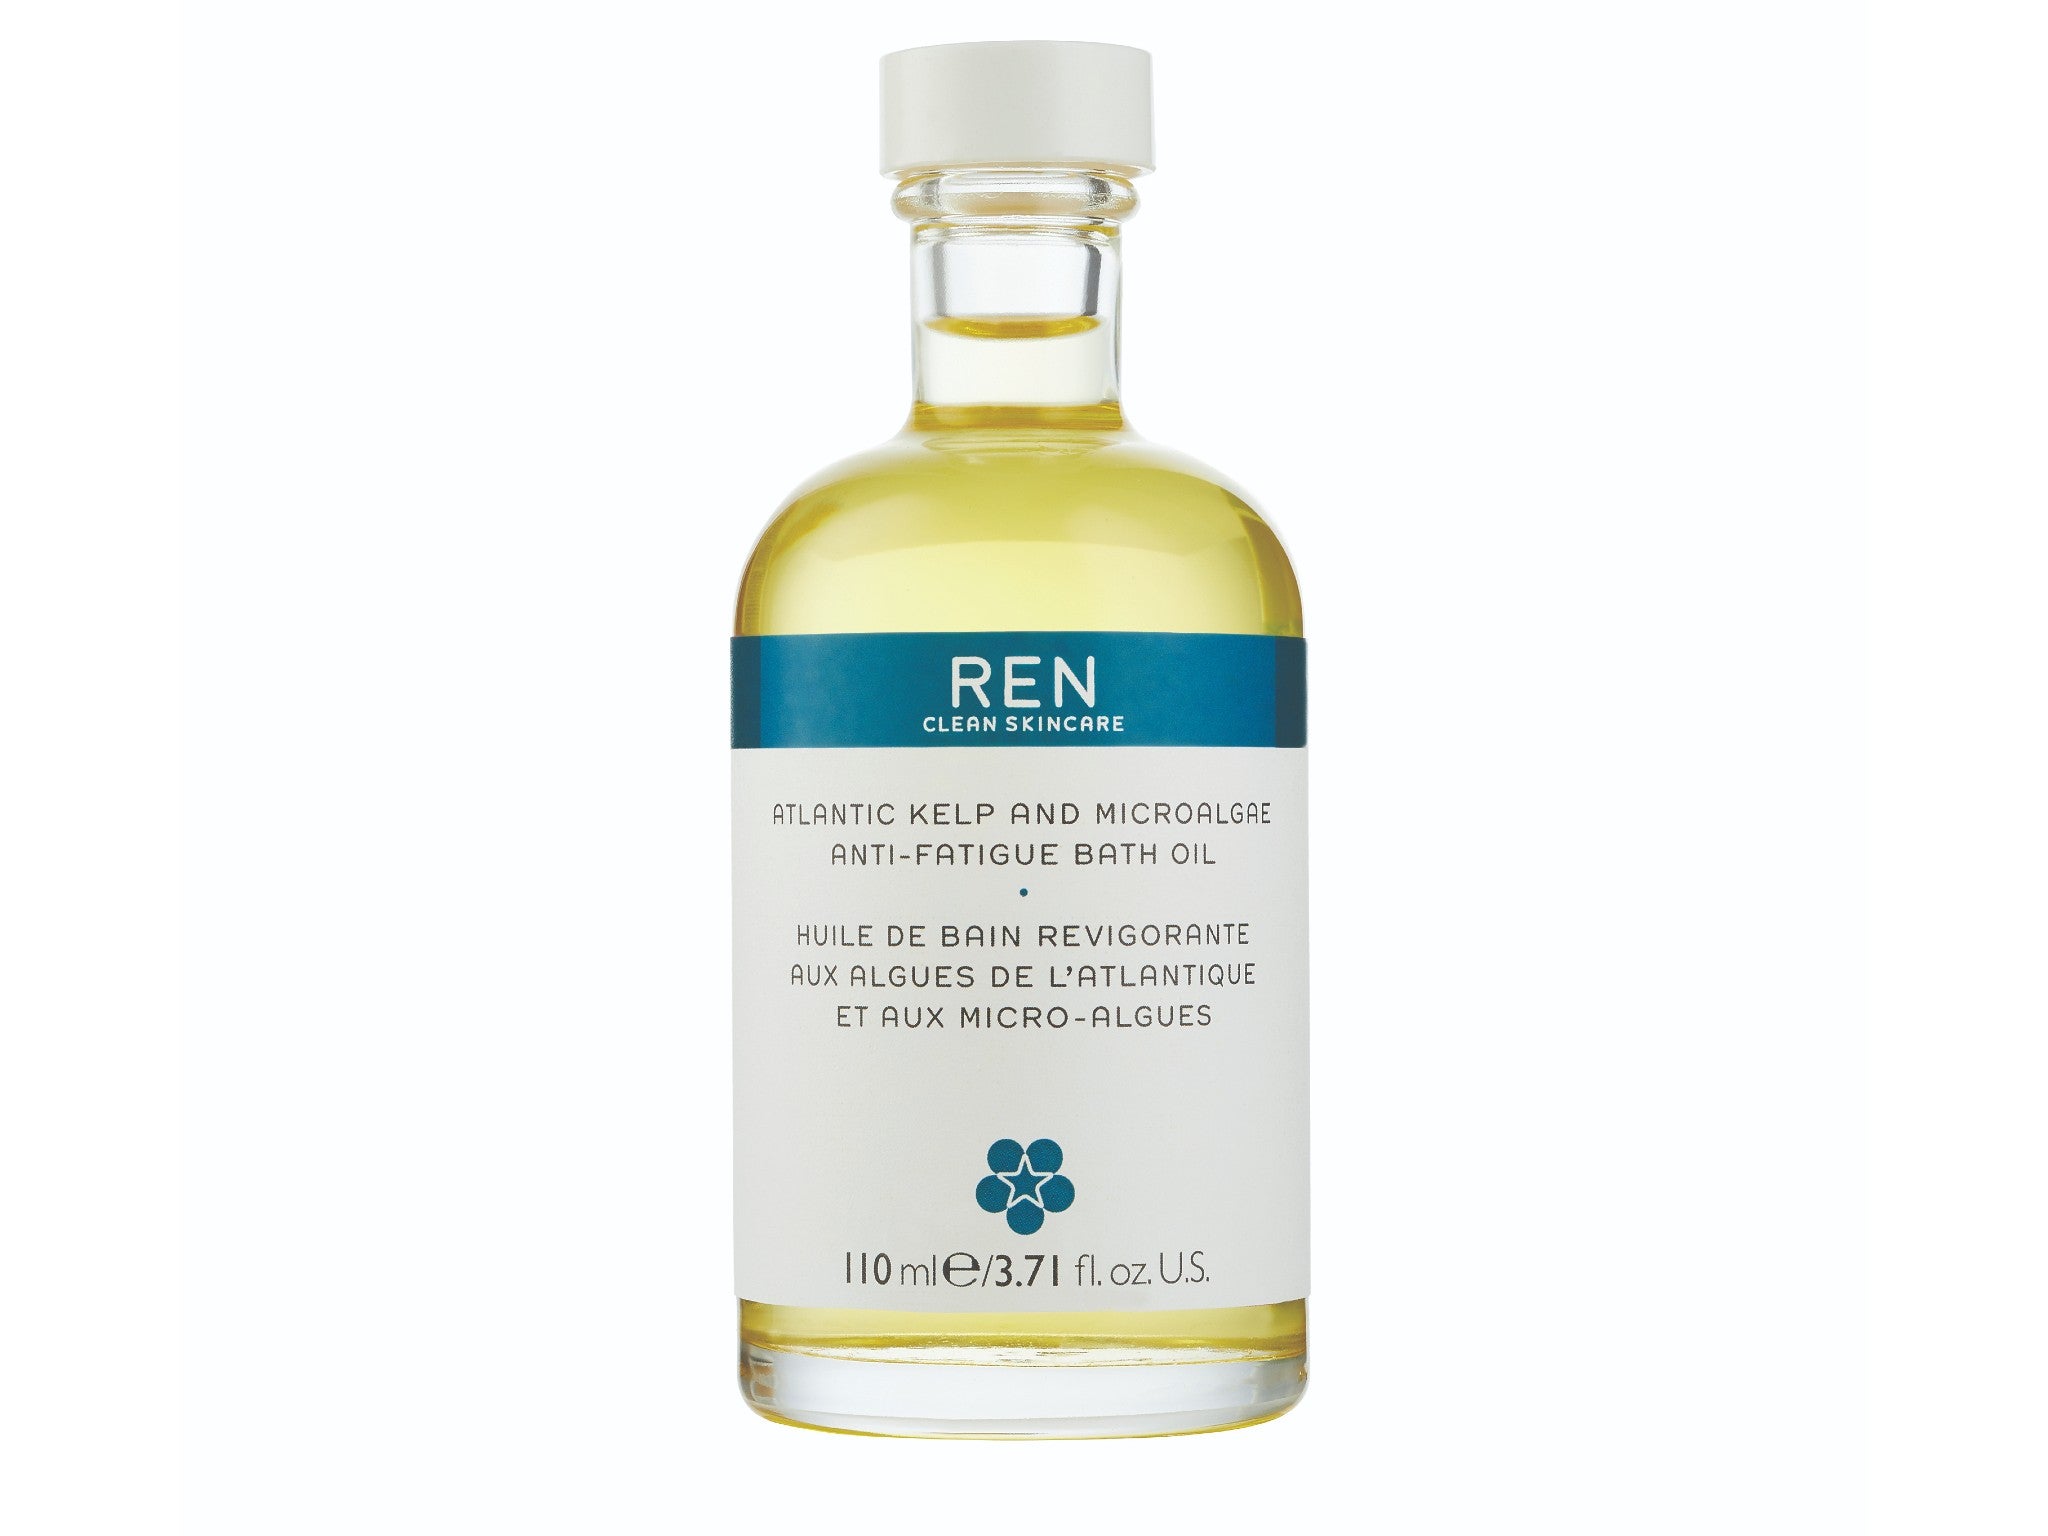 _Ren Clean Skincare Atlantic kelp and microalgae anti-fatigue bath oil indybest.jpeg